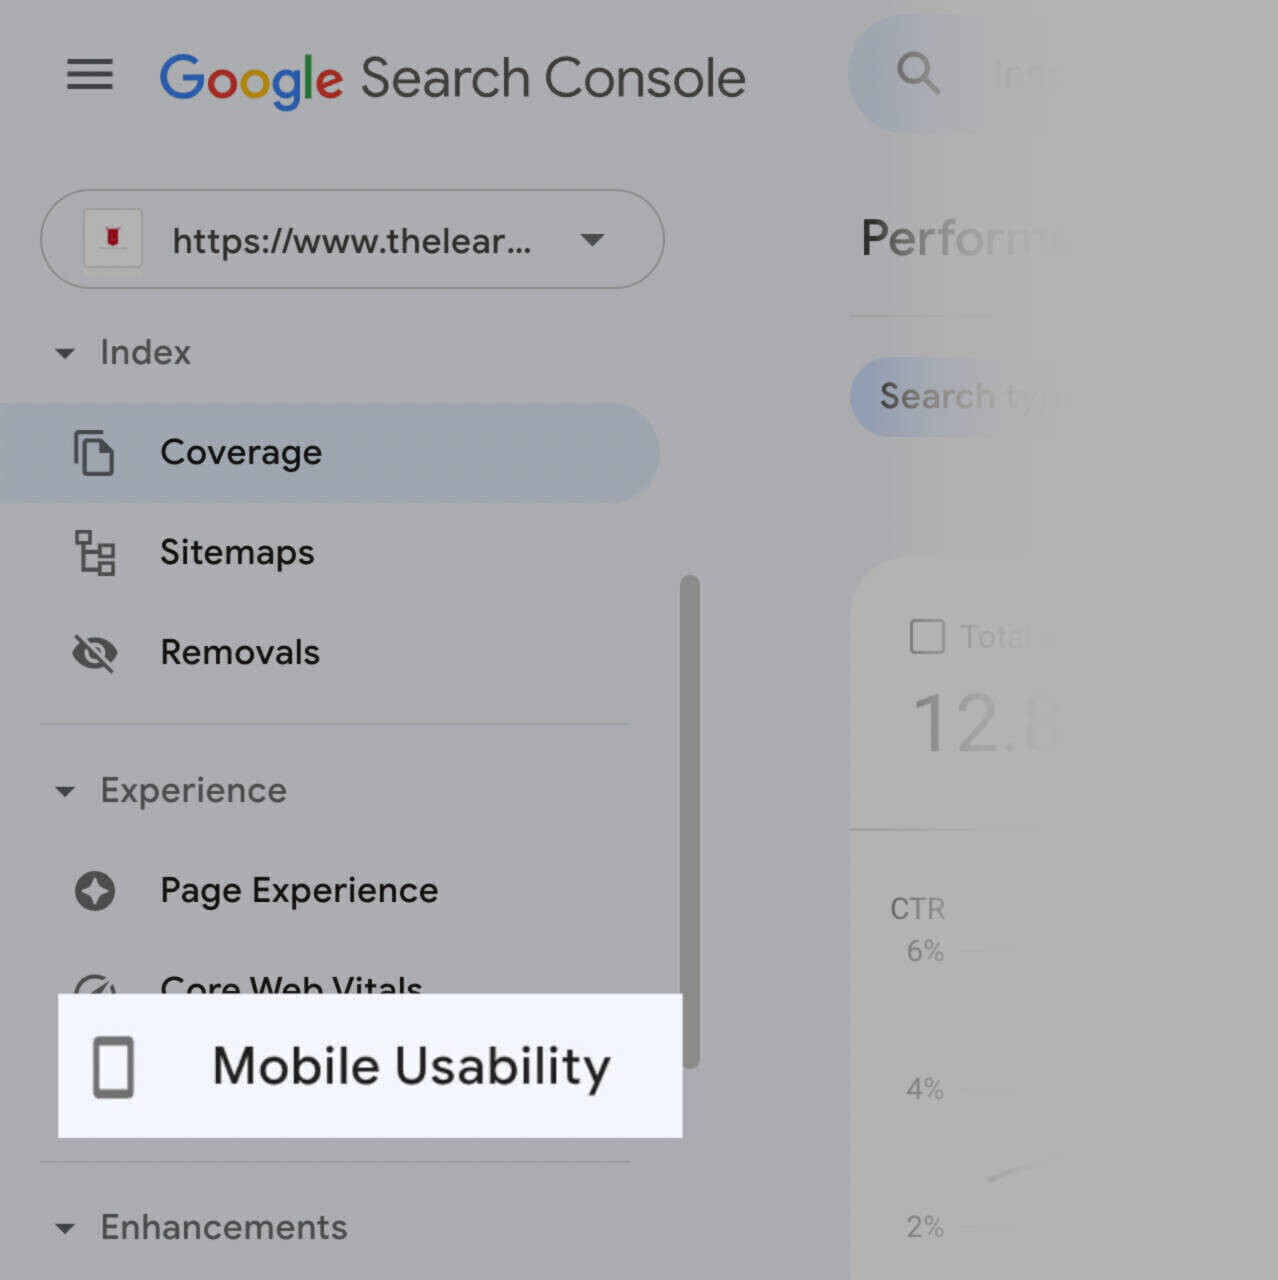 Google's Mobile Usability tool